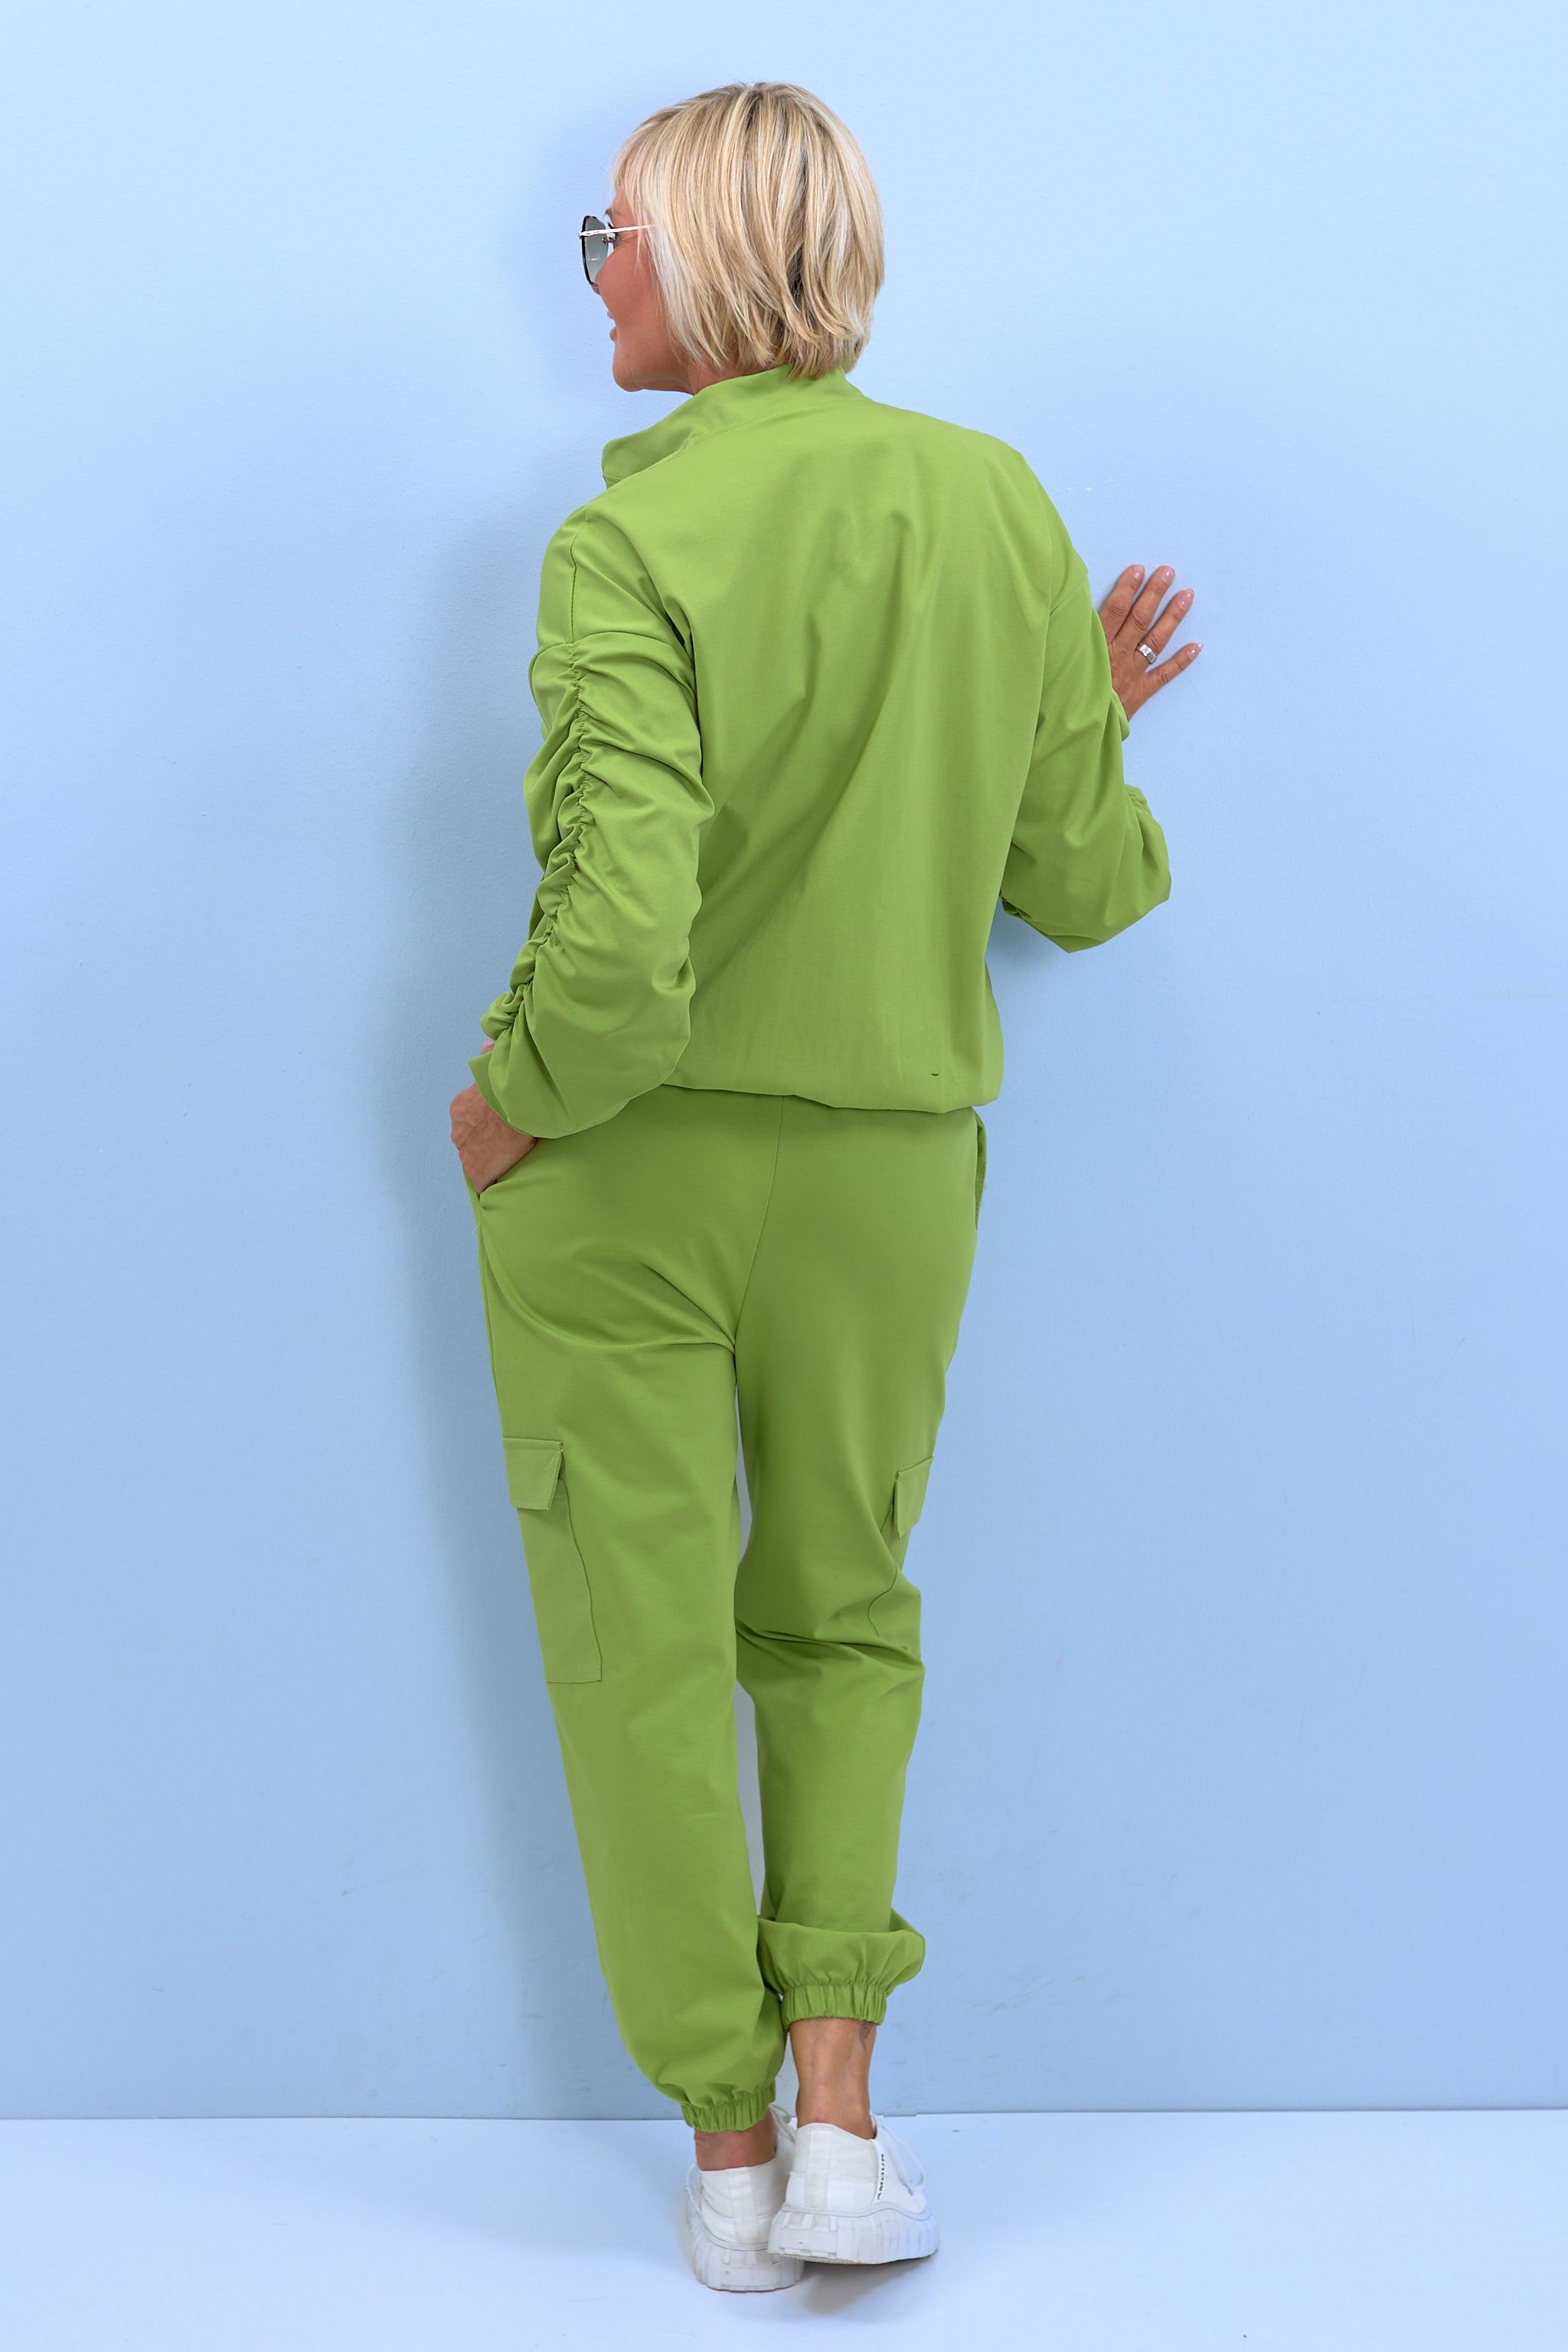 Blouson jacket with ruffled sleeves, green